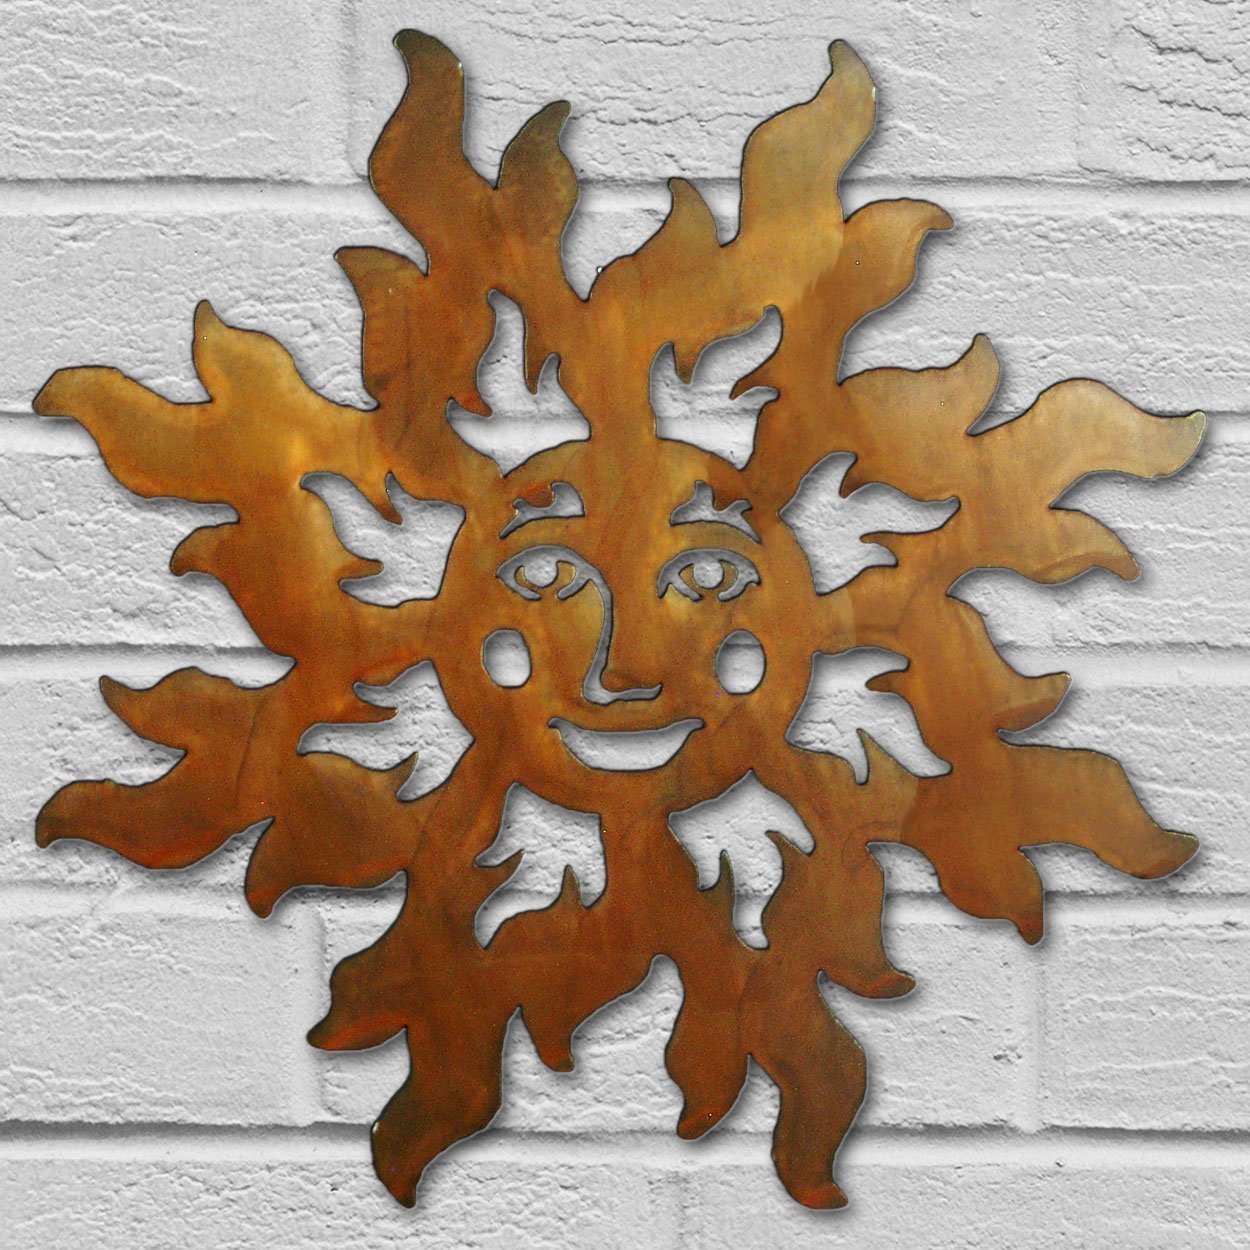 165221 - 12in Happy Face Sun 3D Southwest Metal Wall Art in Rust Finish